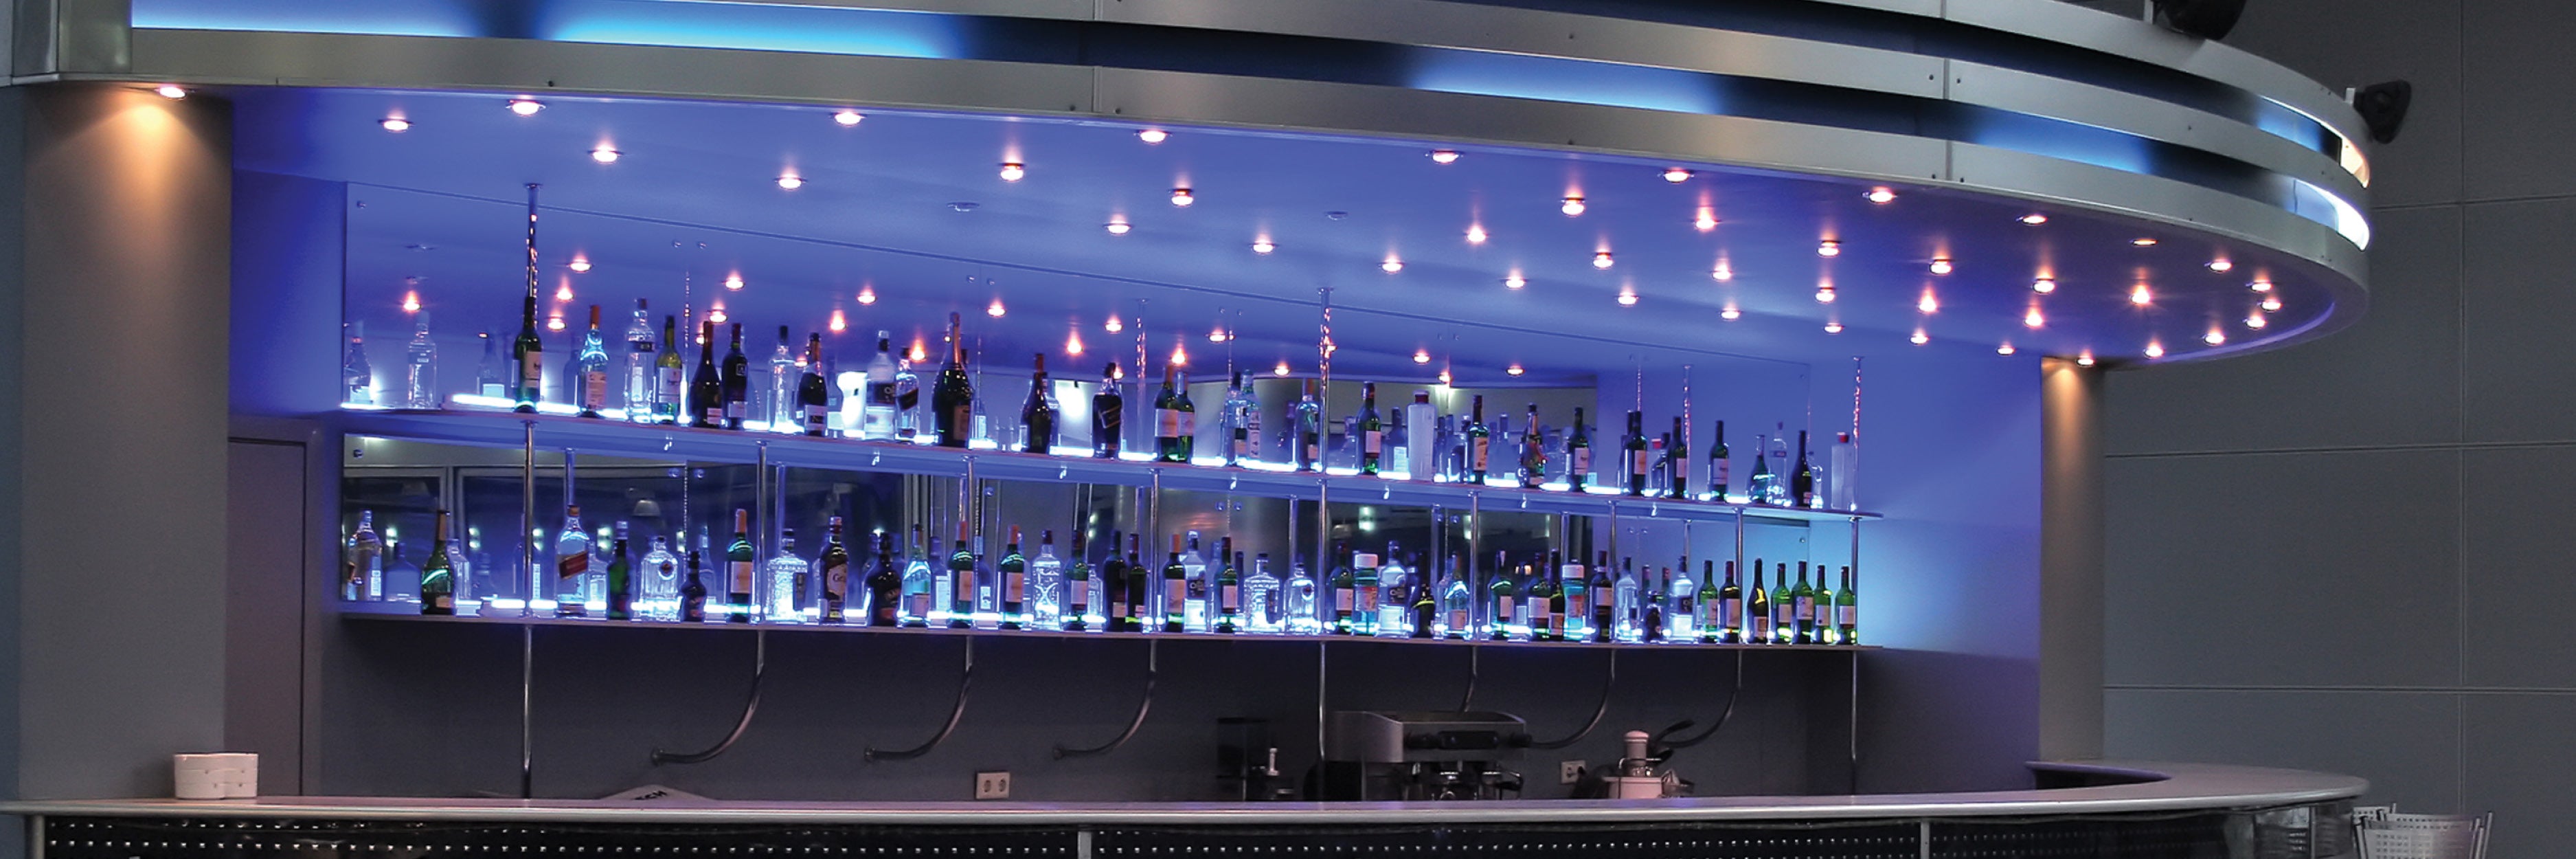 Bar lit by LED strip lights